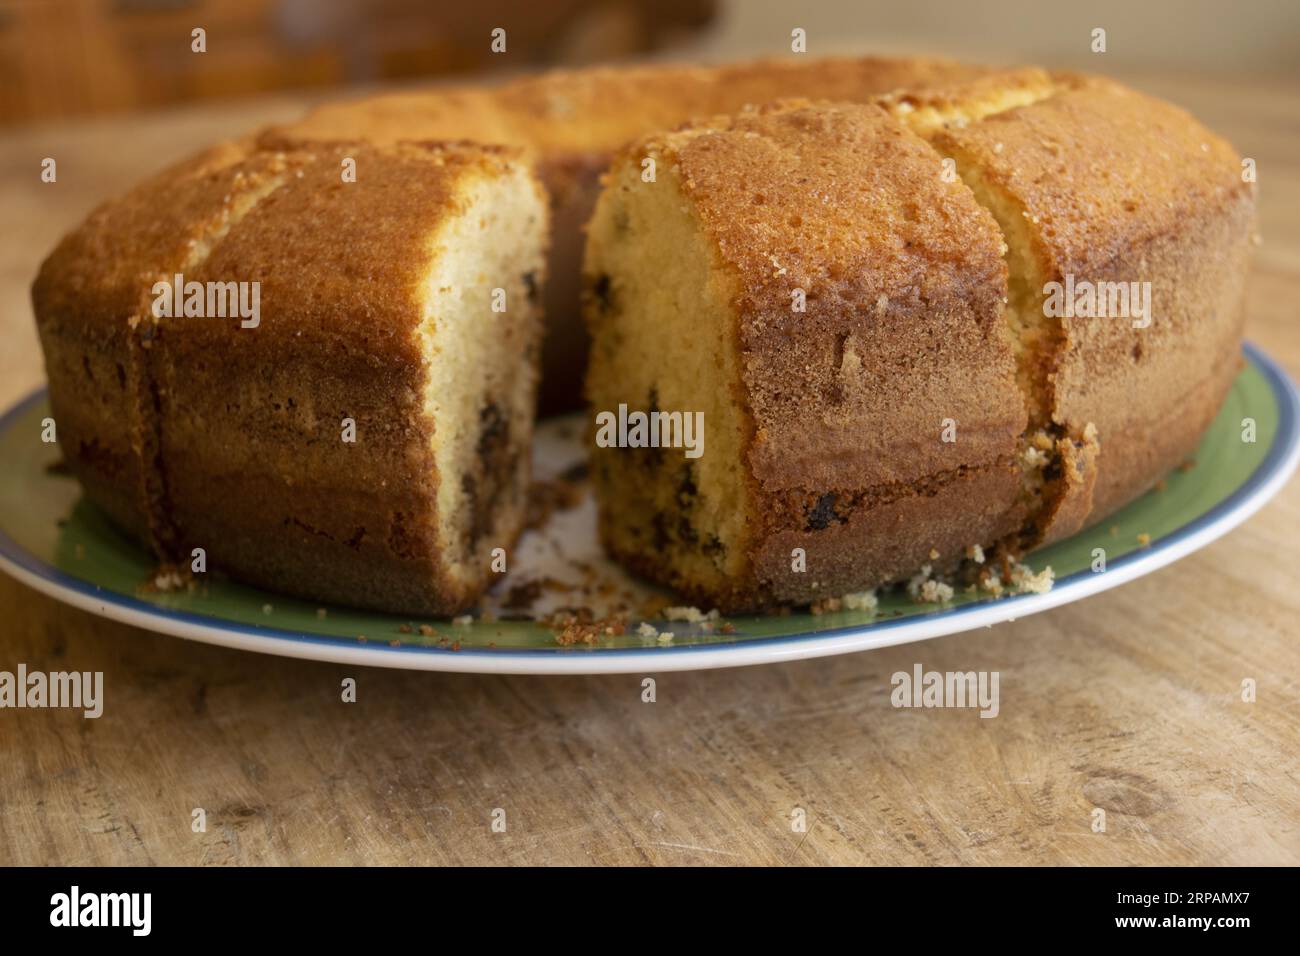 homemade round sponge cake already partially sliced Stock Photo